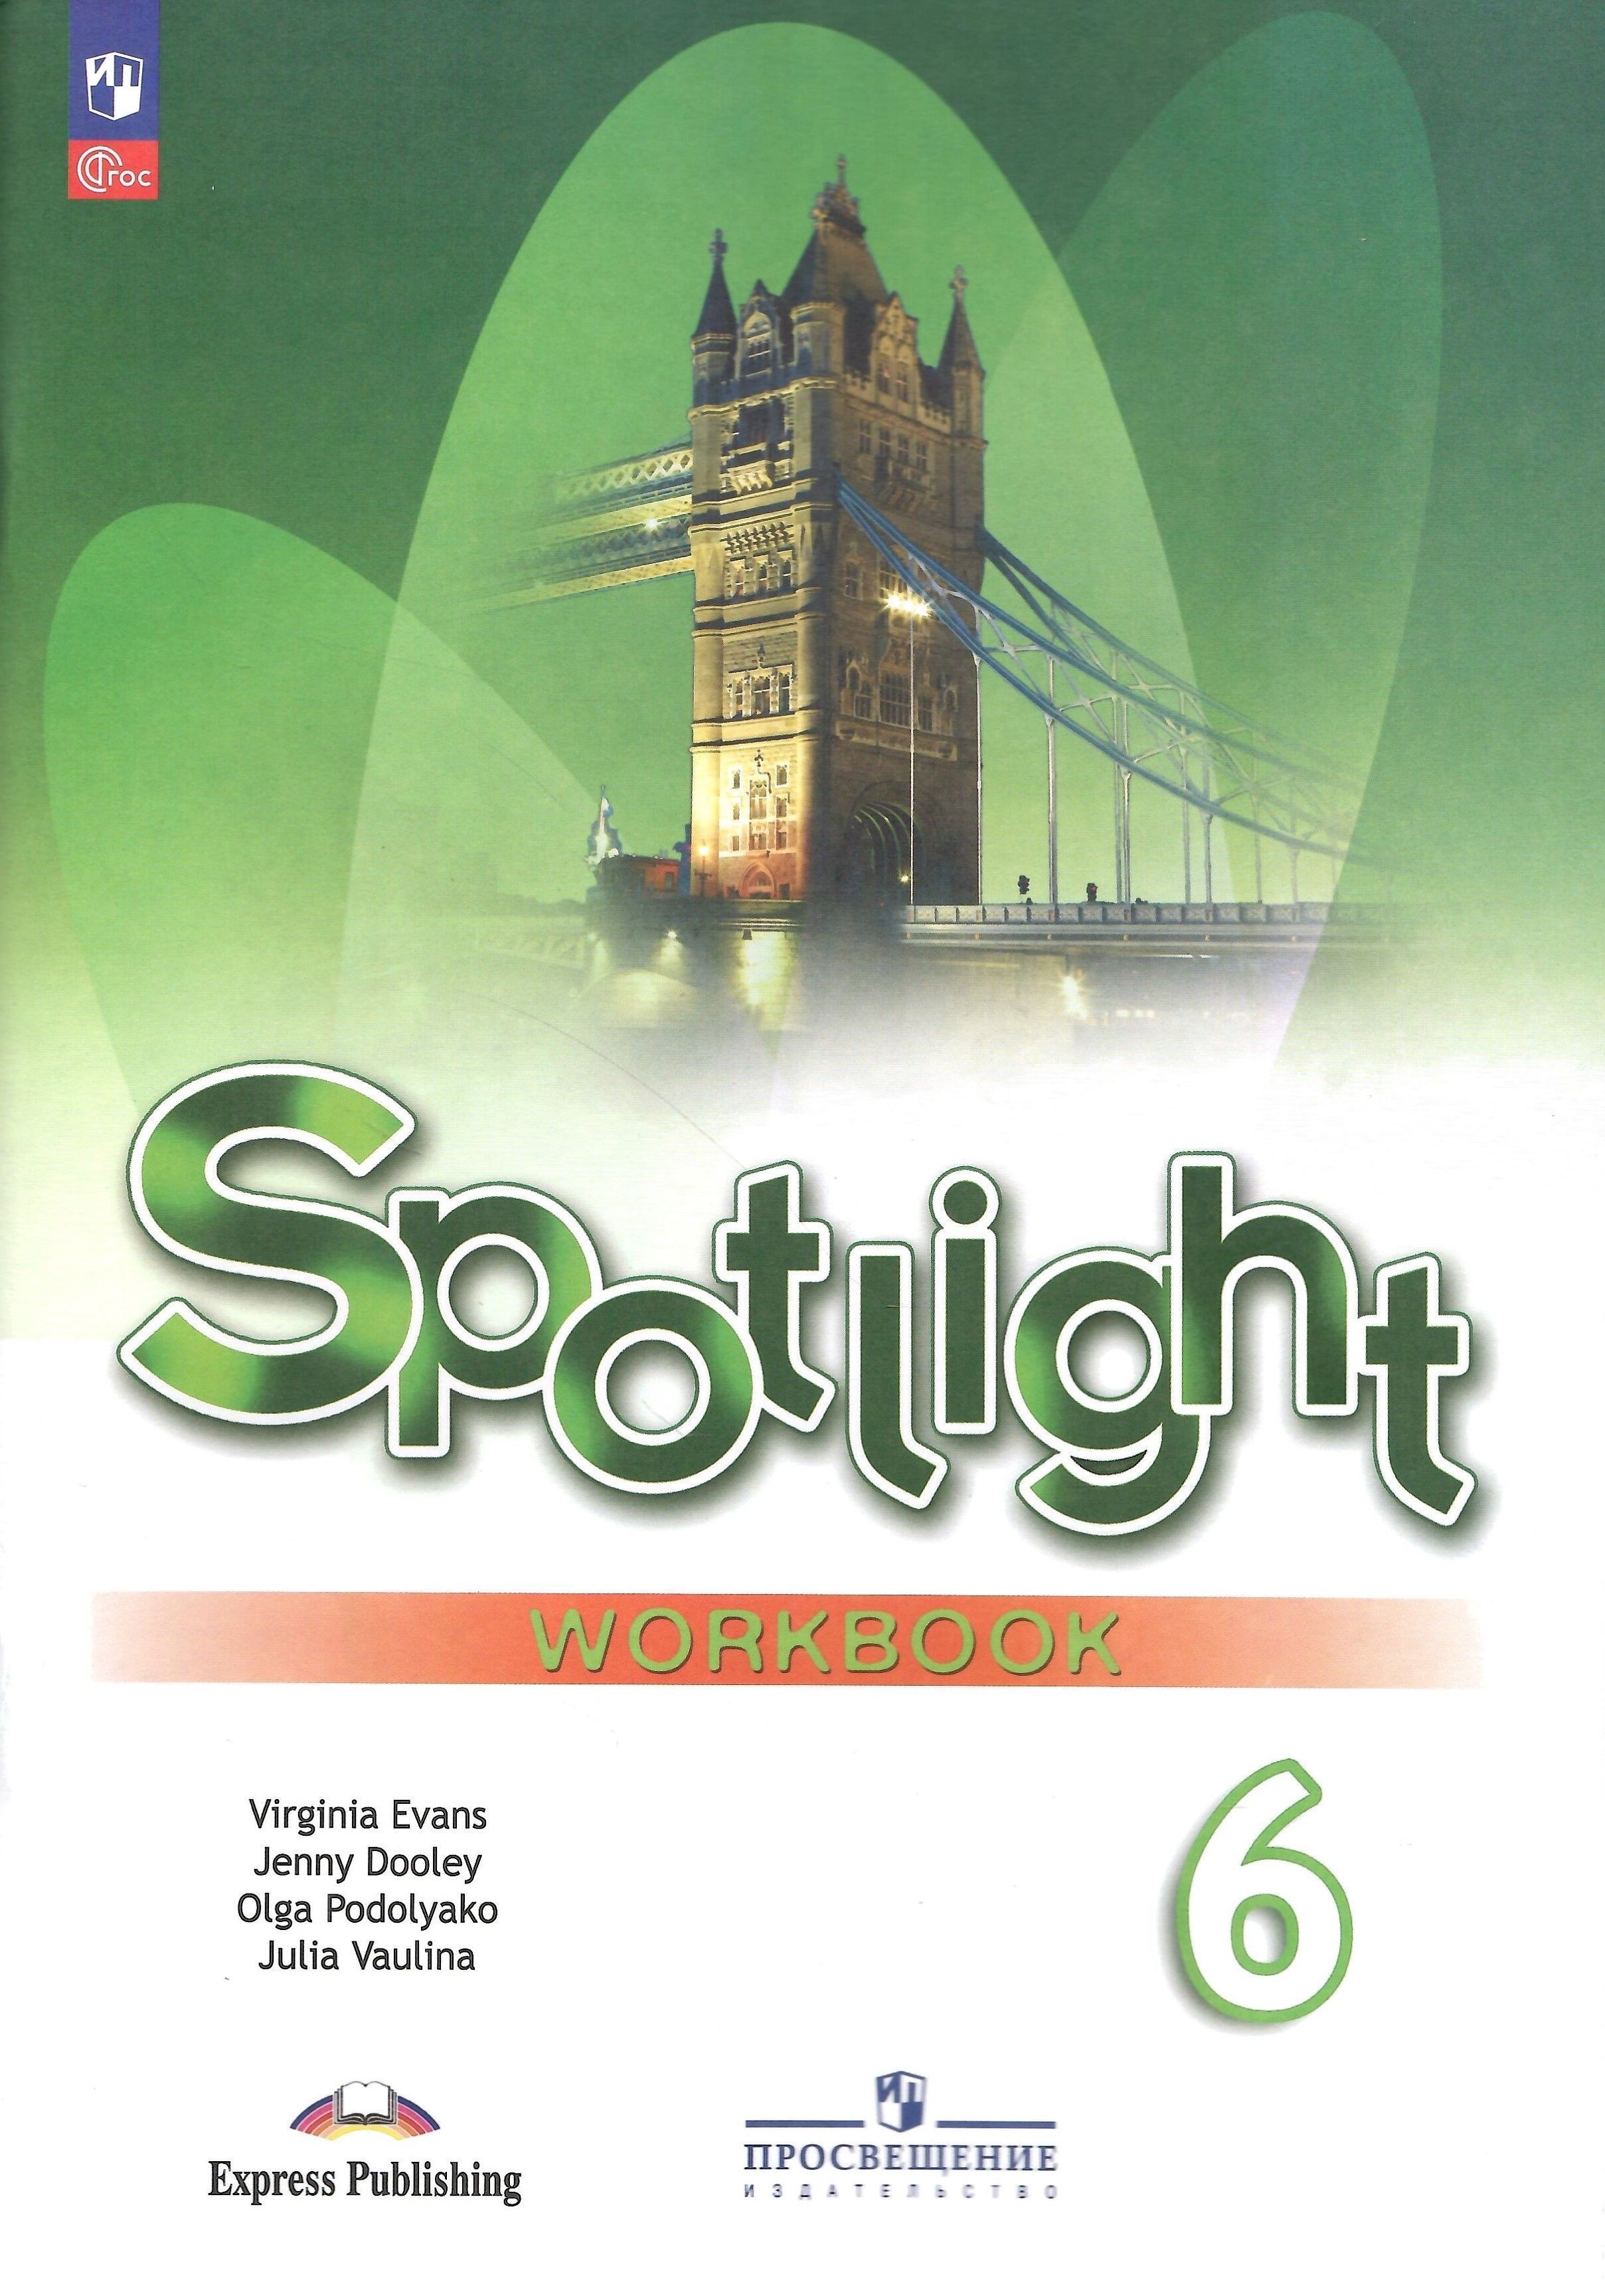 Спотлайт 6 класс 64. Английский язык 11 класс Spotlight ваулина. Spotlight 8 рабочая тетрадь обложка. Workbook 6 класс Spotlight. Тетрадь по английскому языку 11 класс Spotlight.